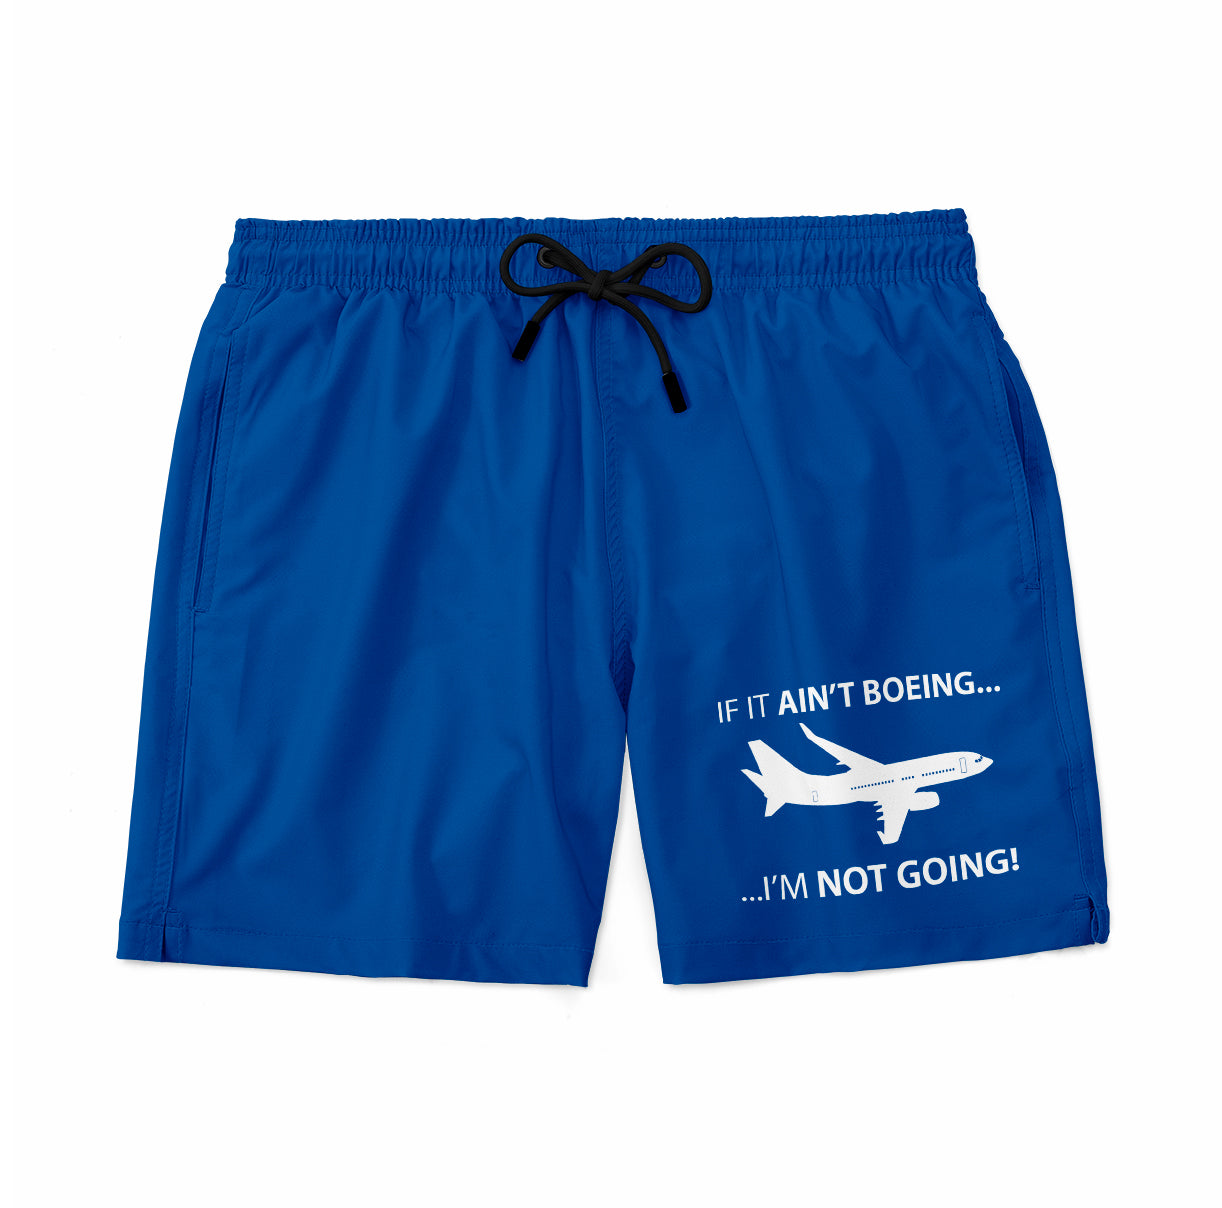 If It Ain't Boeing I'm Not Going! Designed Swim Trunks & Shorts